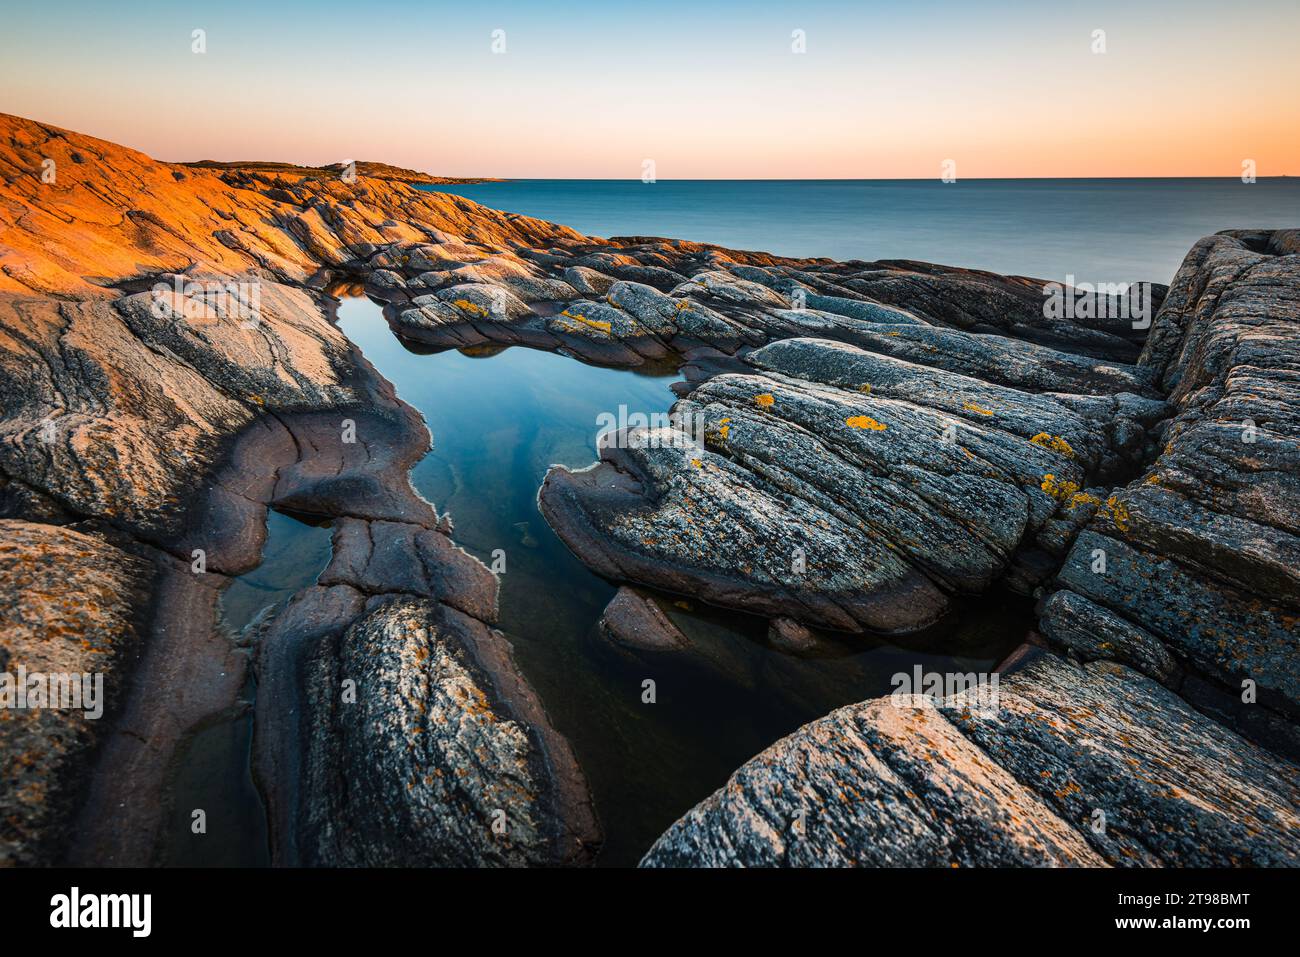 Beautiful sunset over the rocky coast of Sweden's shoreline. Stock Photo